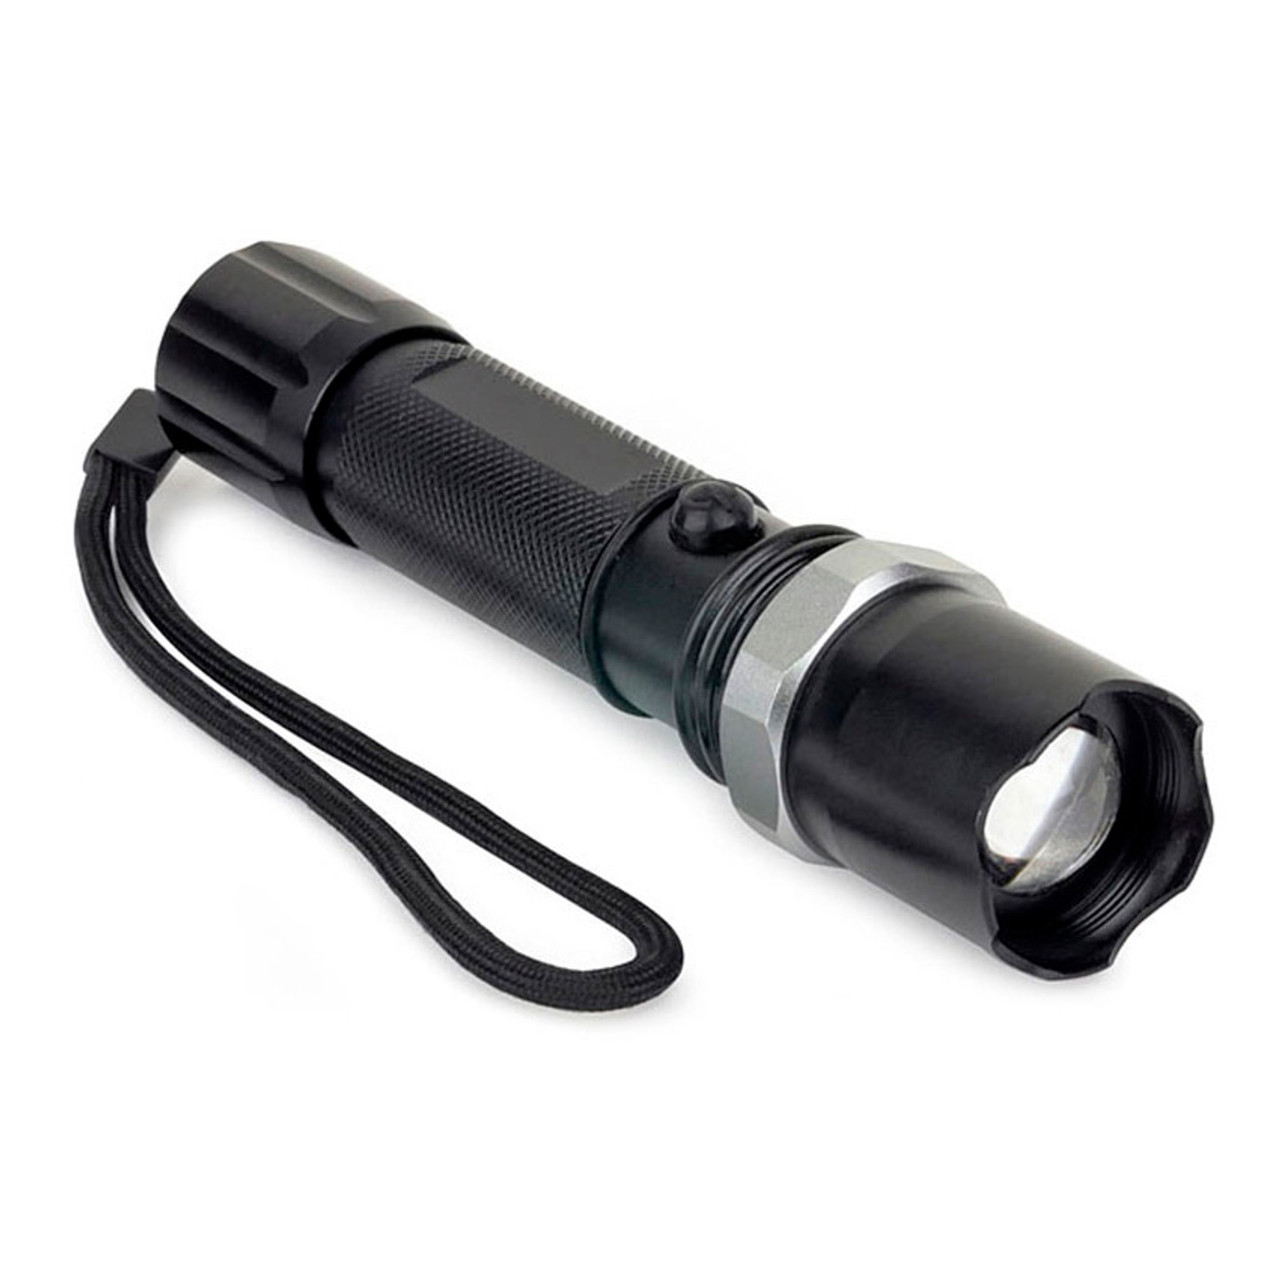 USB Rechargeable Flashlight - 500 Lumen - Adjustable Beam - 3 Light Modes